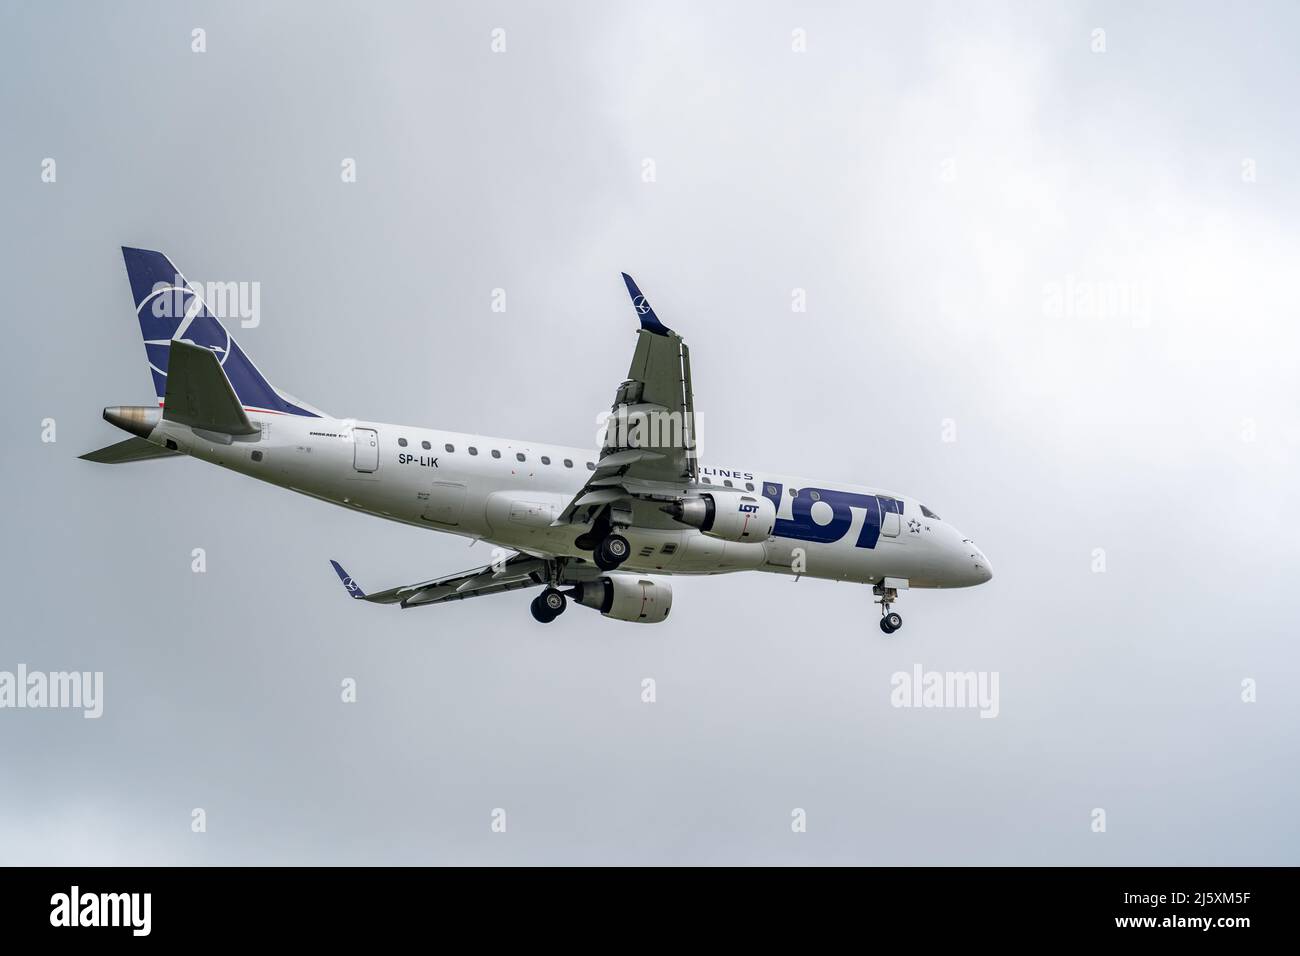 E175 LOT landing at Warsaw Chopin Airport Stock Photo